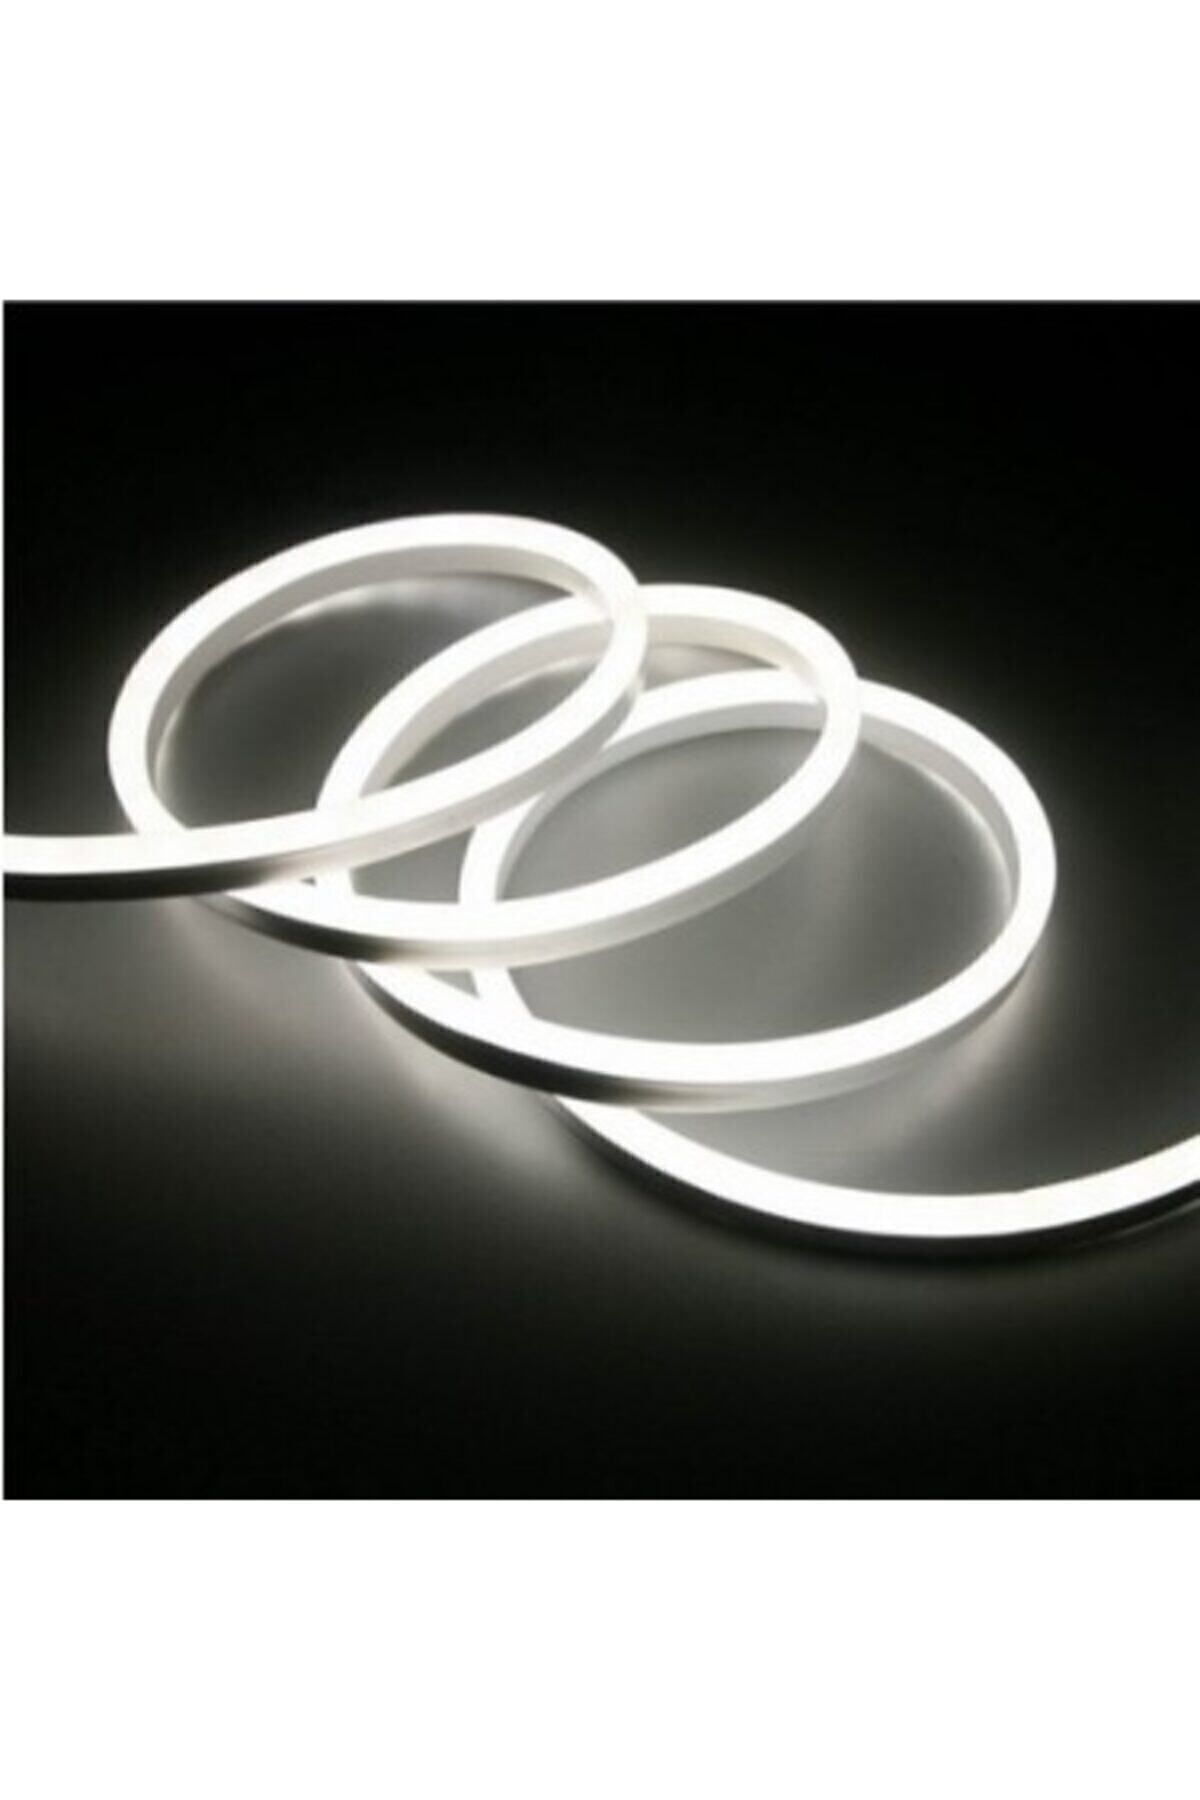 OOKAY Kopya - Neon Esnek Şerit Led 3 Metre Beyaz + 220 Volt Fiş